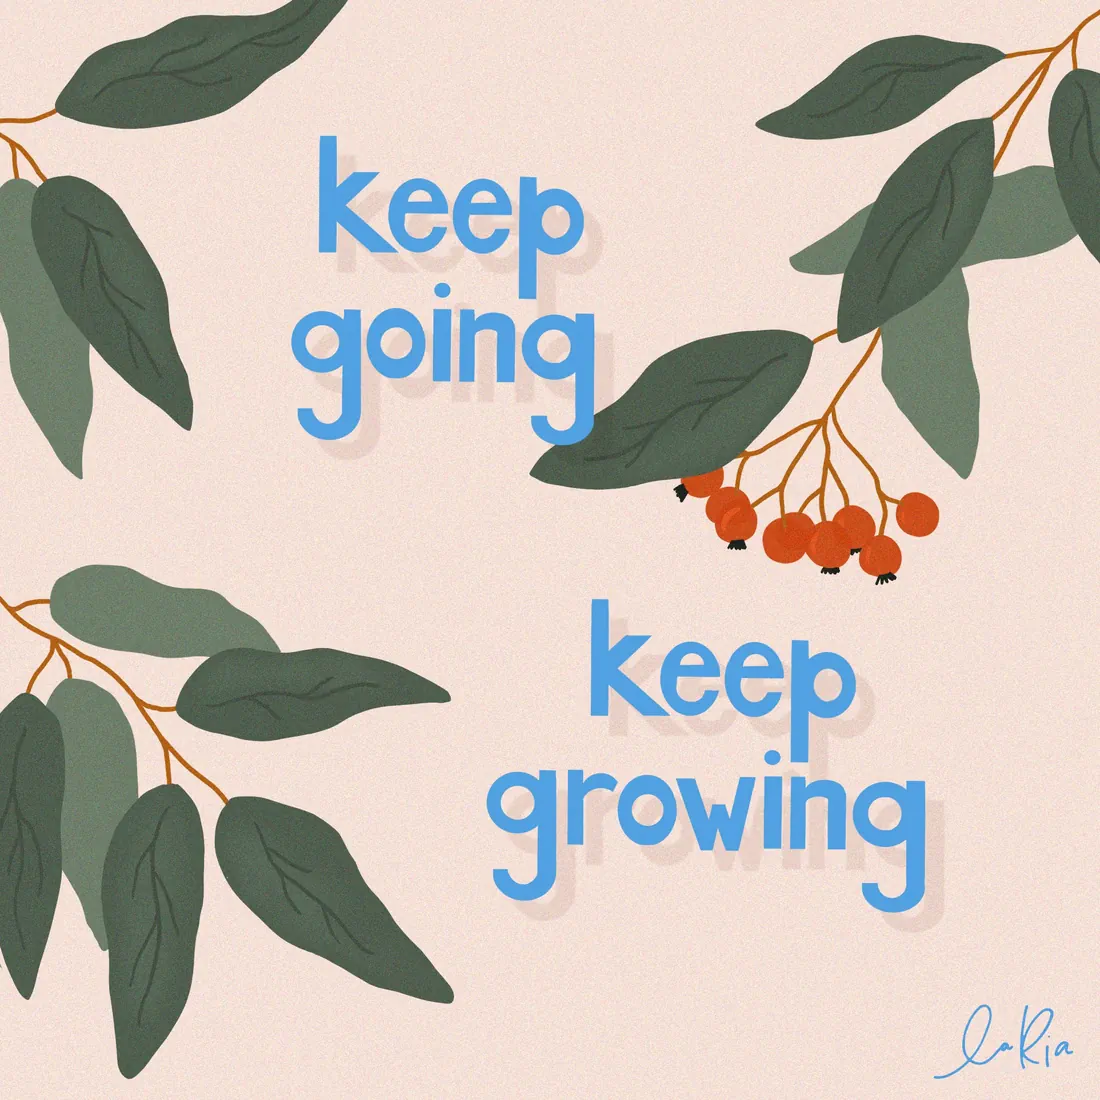 keep going, keep growing2